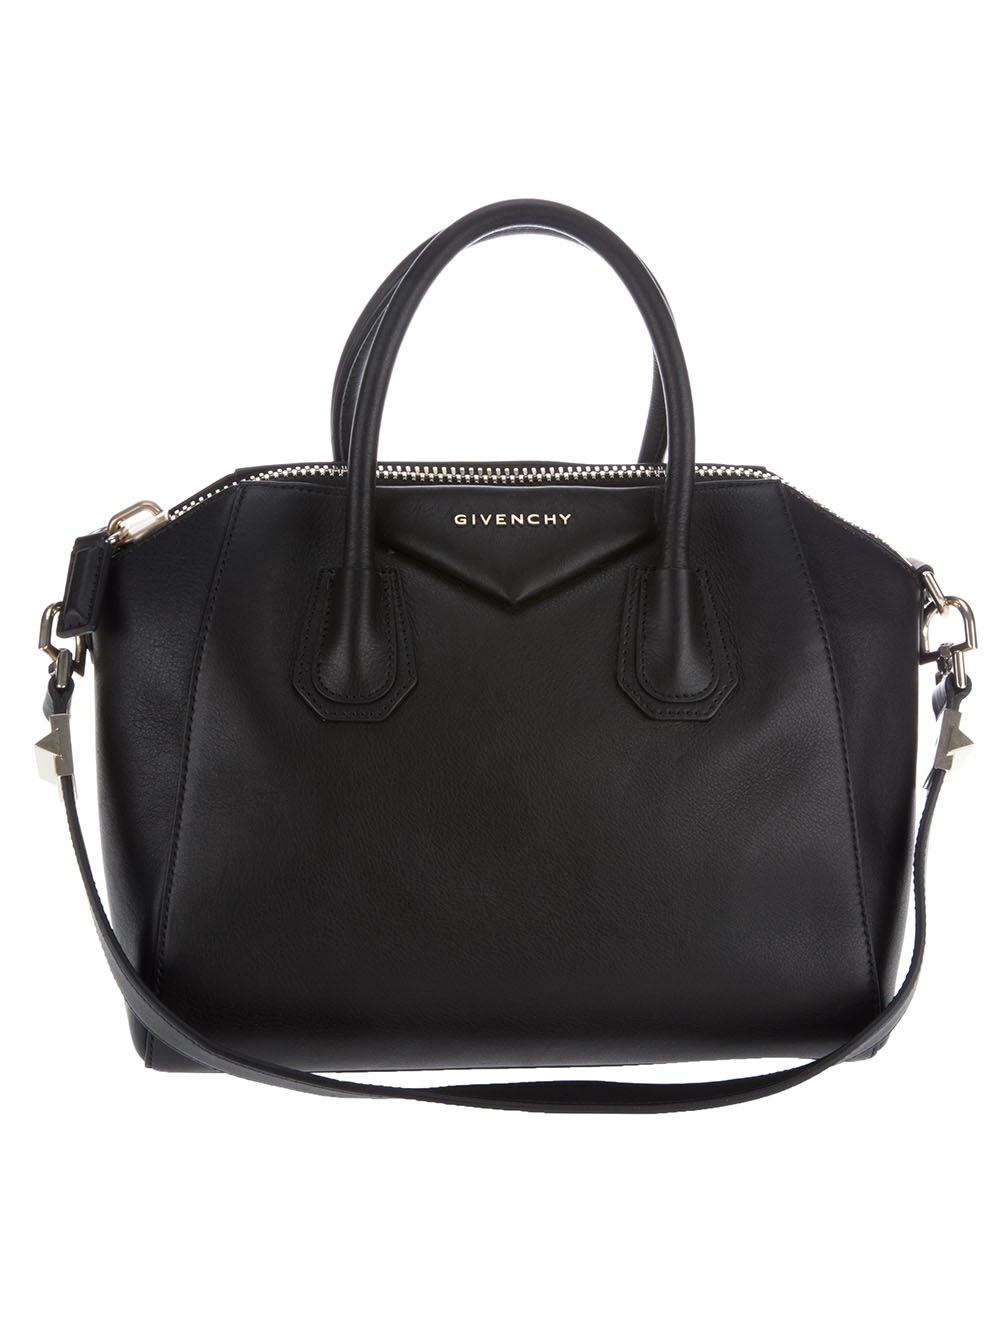 Givenchy Small Antigona Bag in Black | Lyst